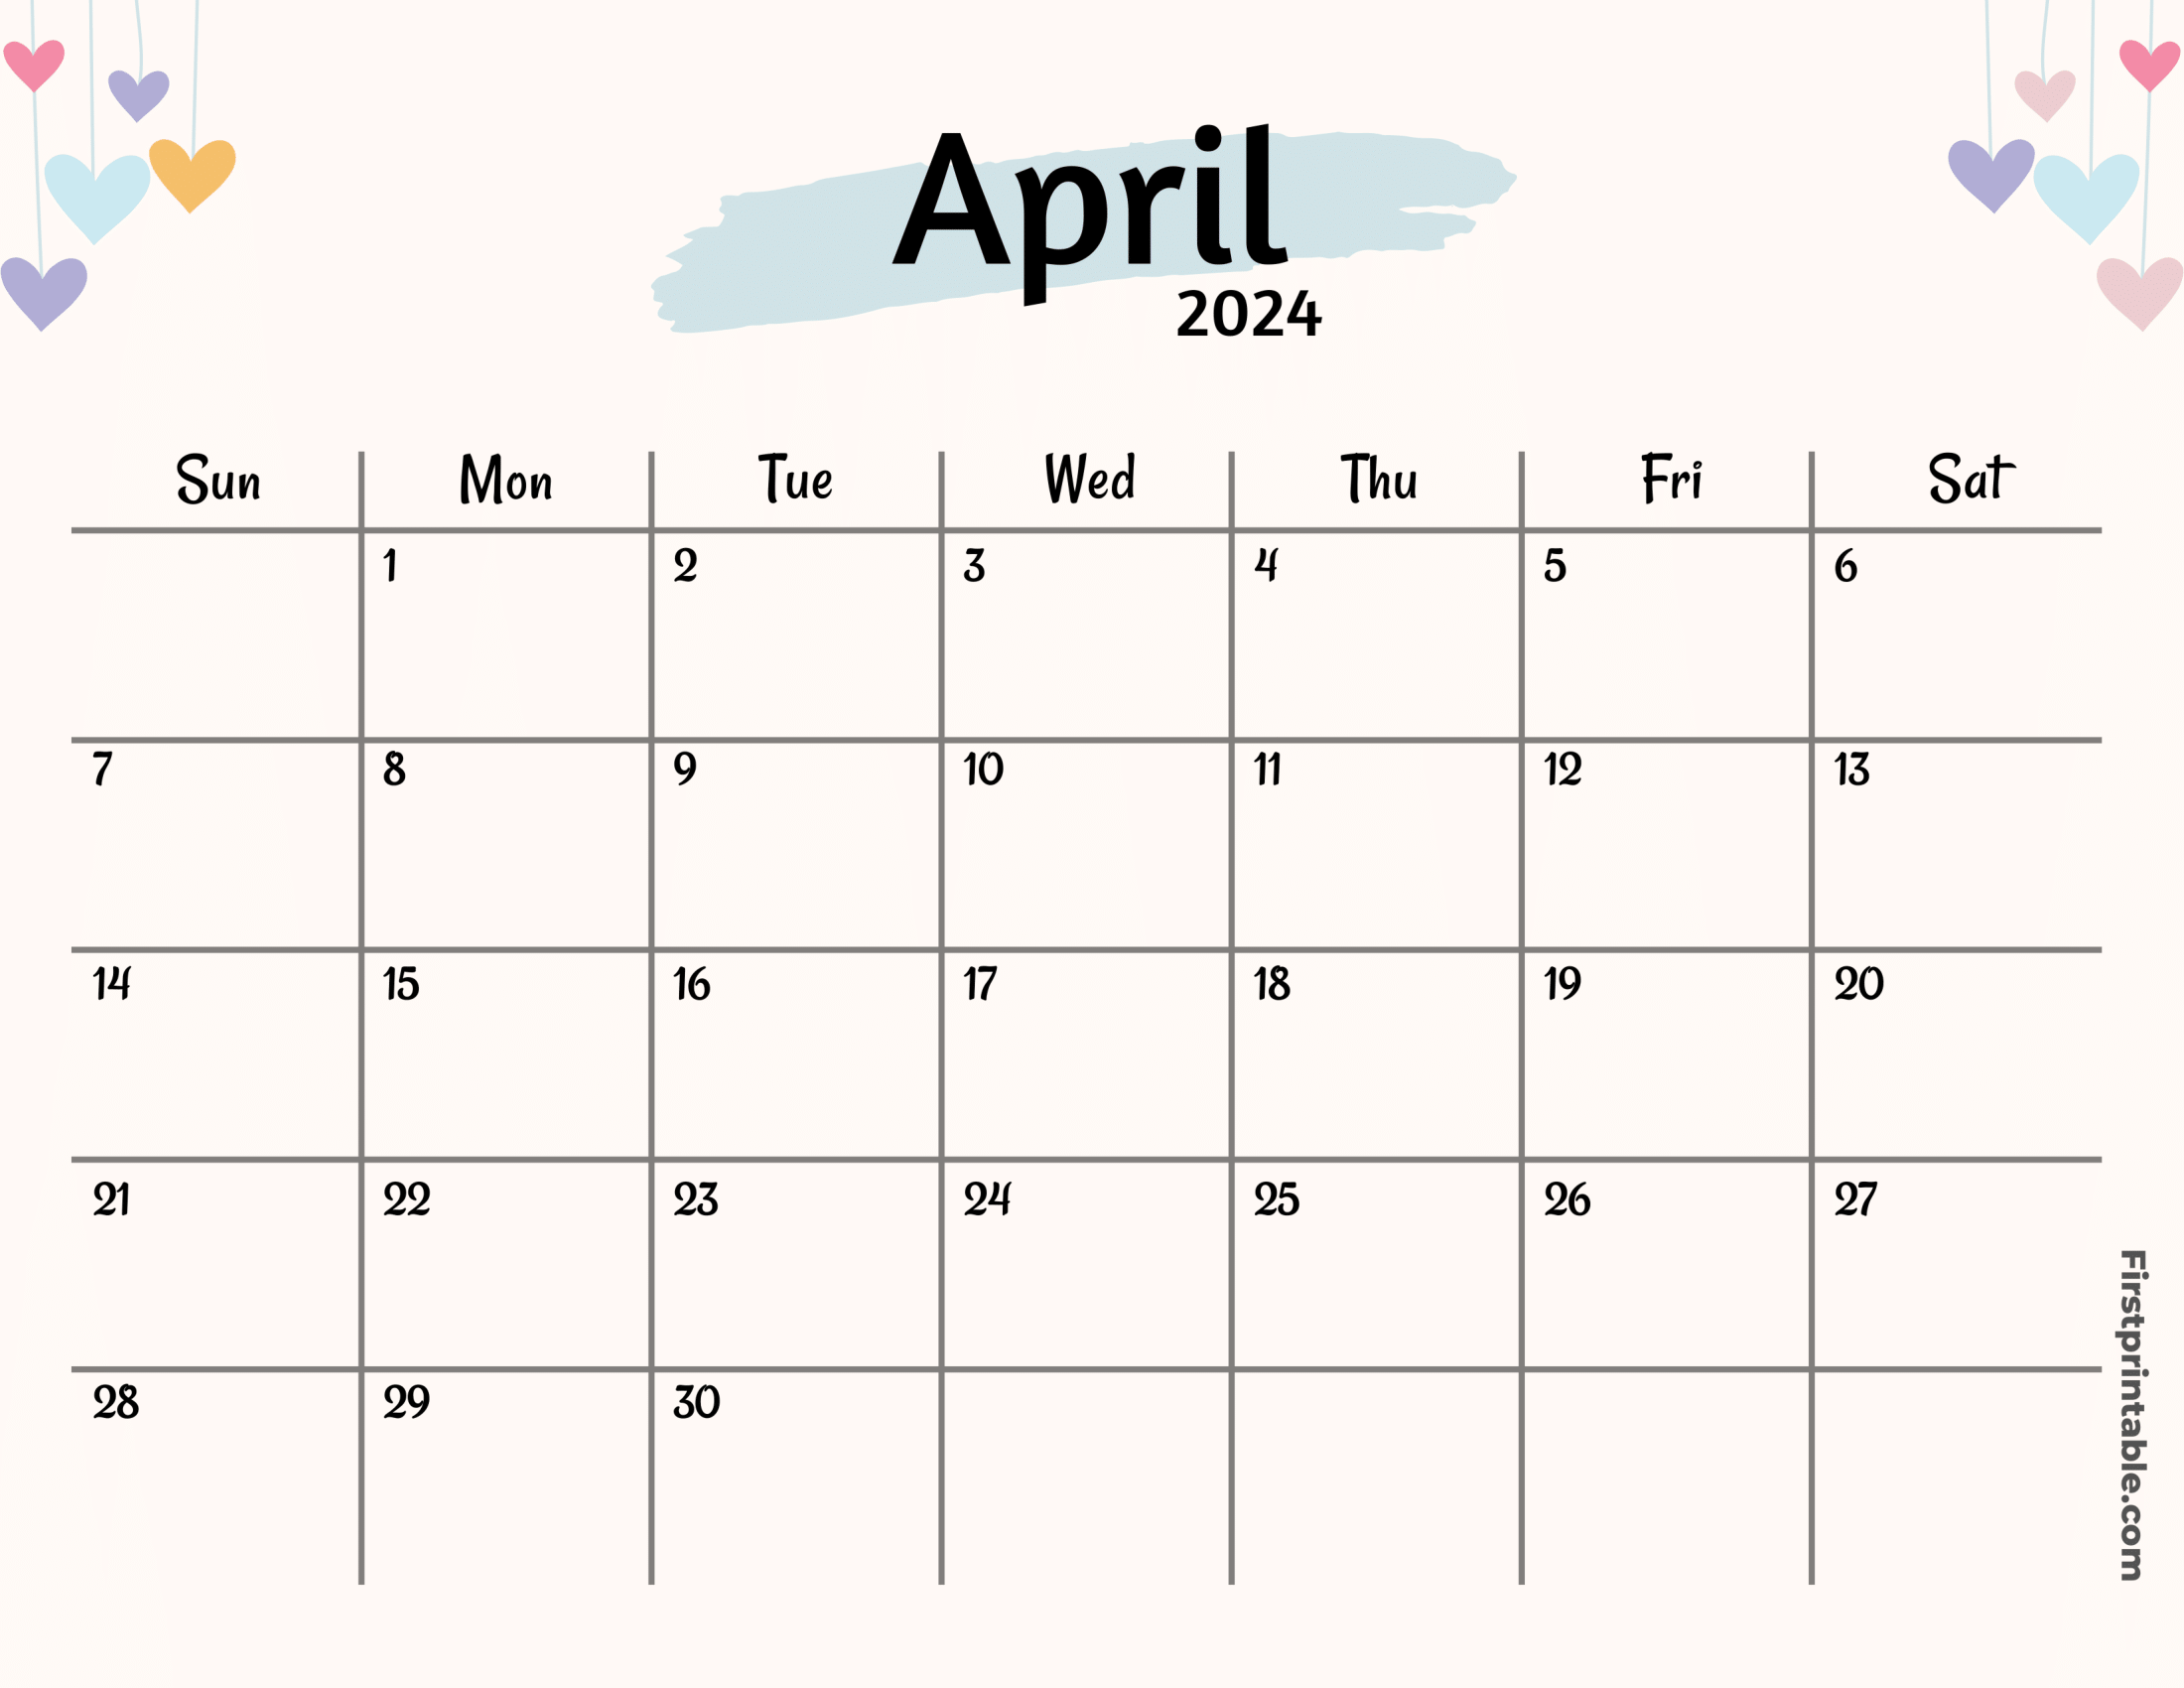 April Calendar 2024 template - Printable and Fillable